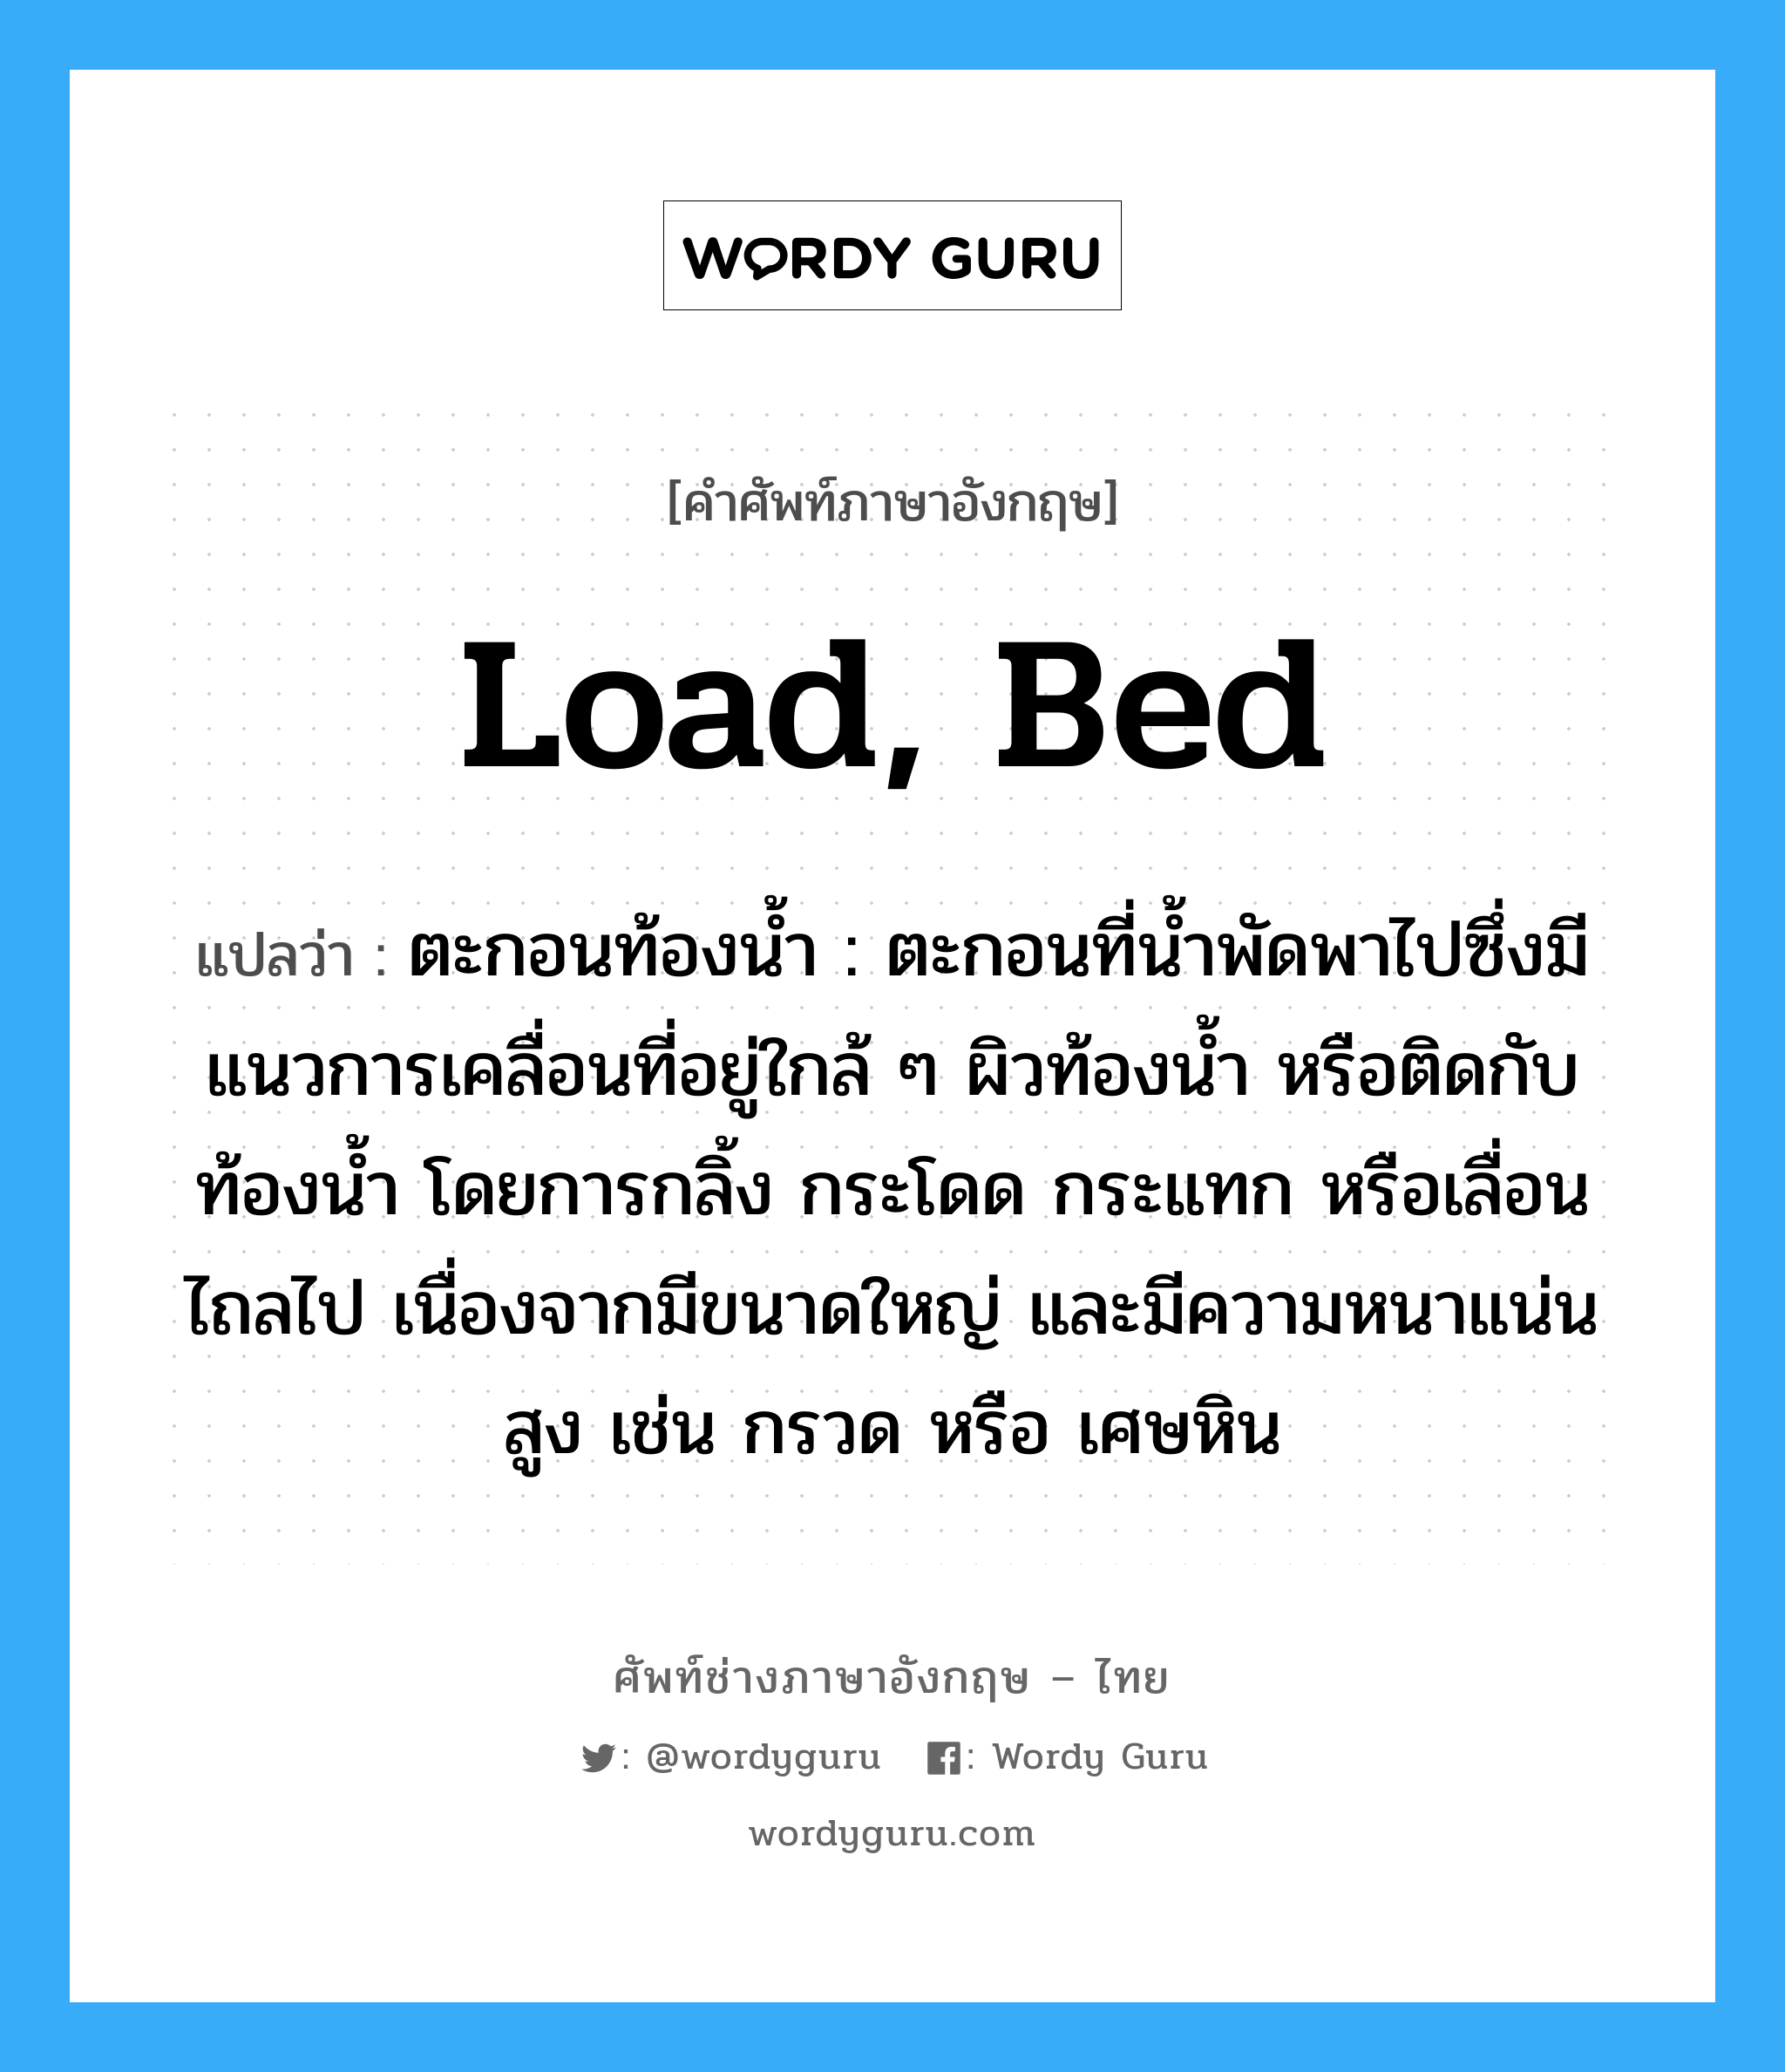 load, bed แปลว่า?, คำศัพท์ช่างภาษาอังกฤษ - ไทย load, bed คำศัพท์ภาษาอังกฤษ load, bed แปลว่า ตะกอนท้องน้ำ : ตะกอนที่น้ำพัดพาไปซึ่งมีแนวการเคลื่อนที่อยู่ใกล้ ๆ ผิวท้องน้ำ หรือติดกับท้องน้ำ โดยการกลิ้ง กระโดด กระแทก หรือเลื่อนไถลไป เนื่องจากมีขนาดใหญ่ และมีความหนาแน่นสูง เช่น กรวด หรือ เศษหิน